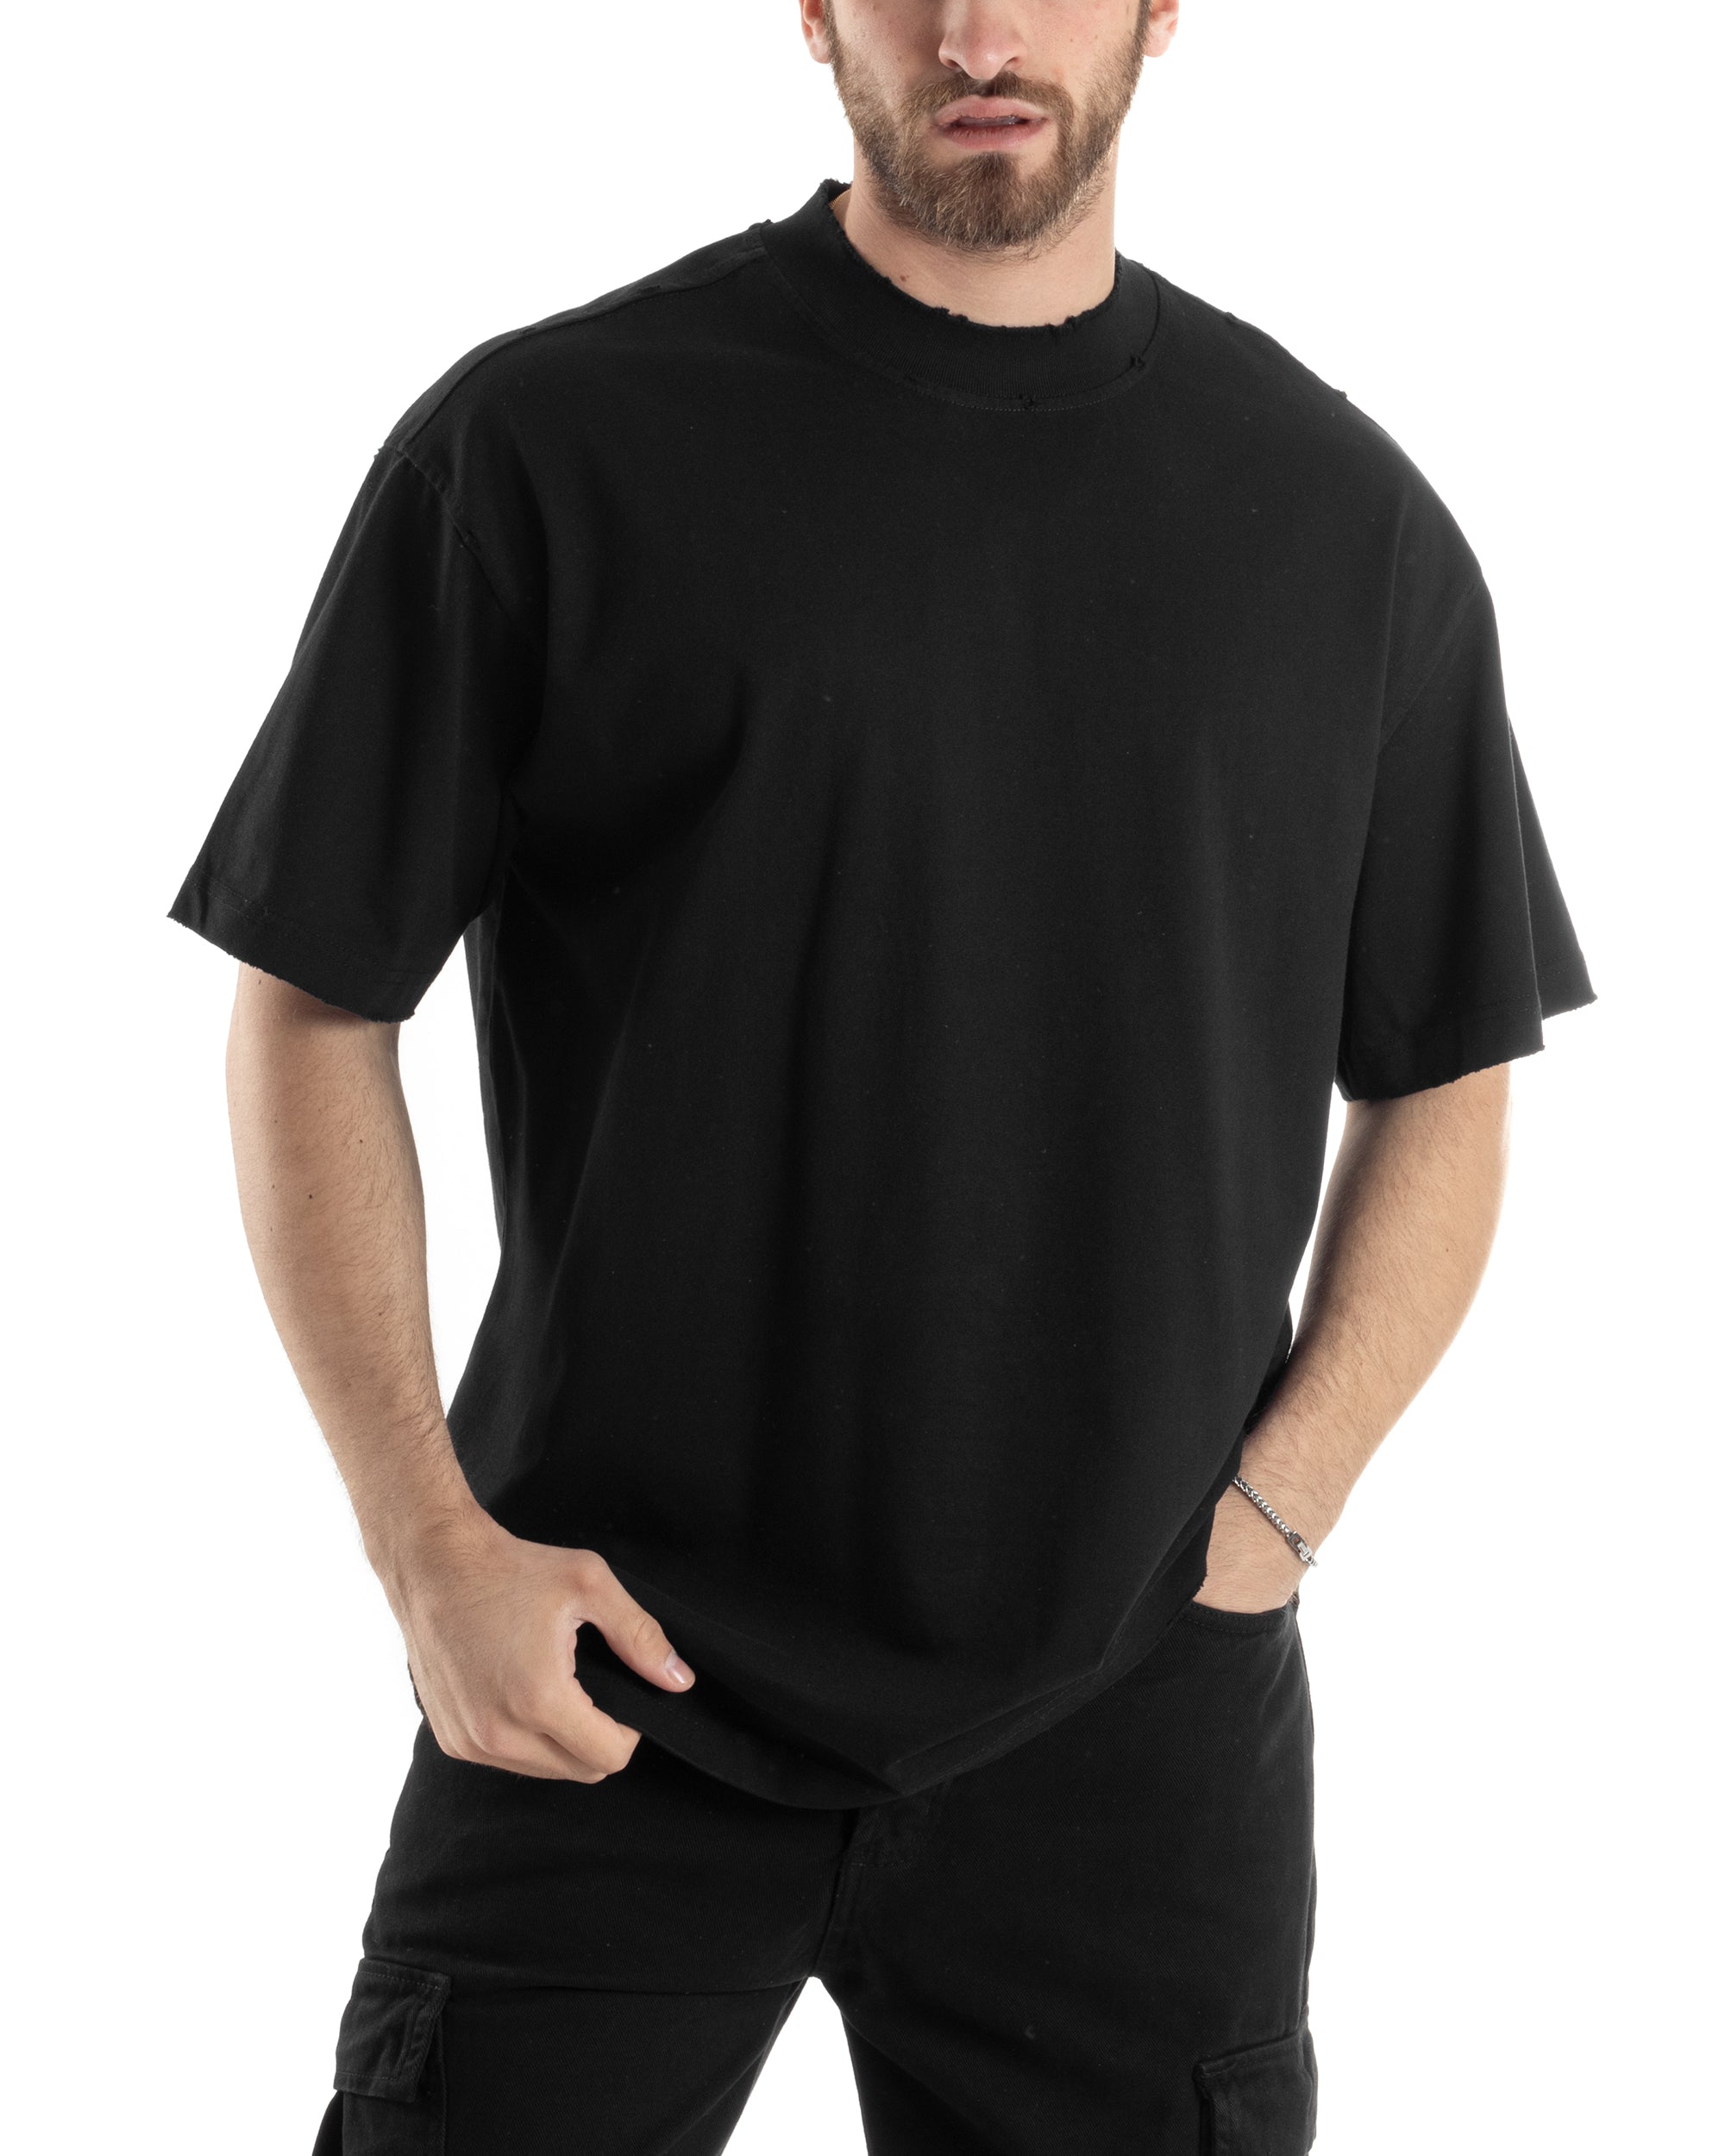 T-shirt Uomo Girocollo Boxy Fit Cotone Basic Con Rotture Relaxed Fit Gola Alta Nero GIOSAL-TS3016A